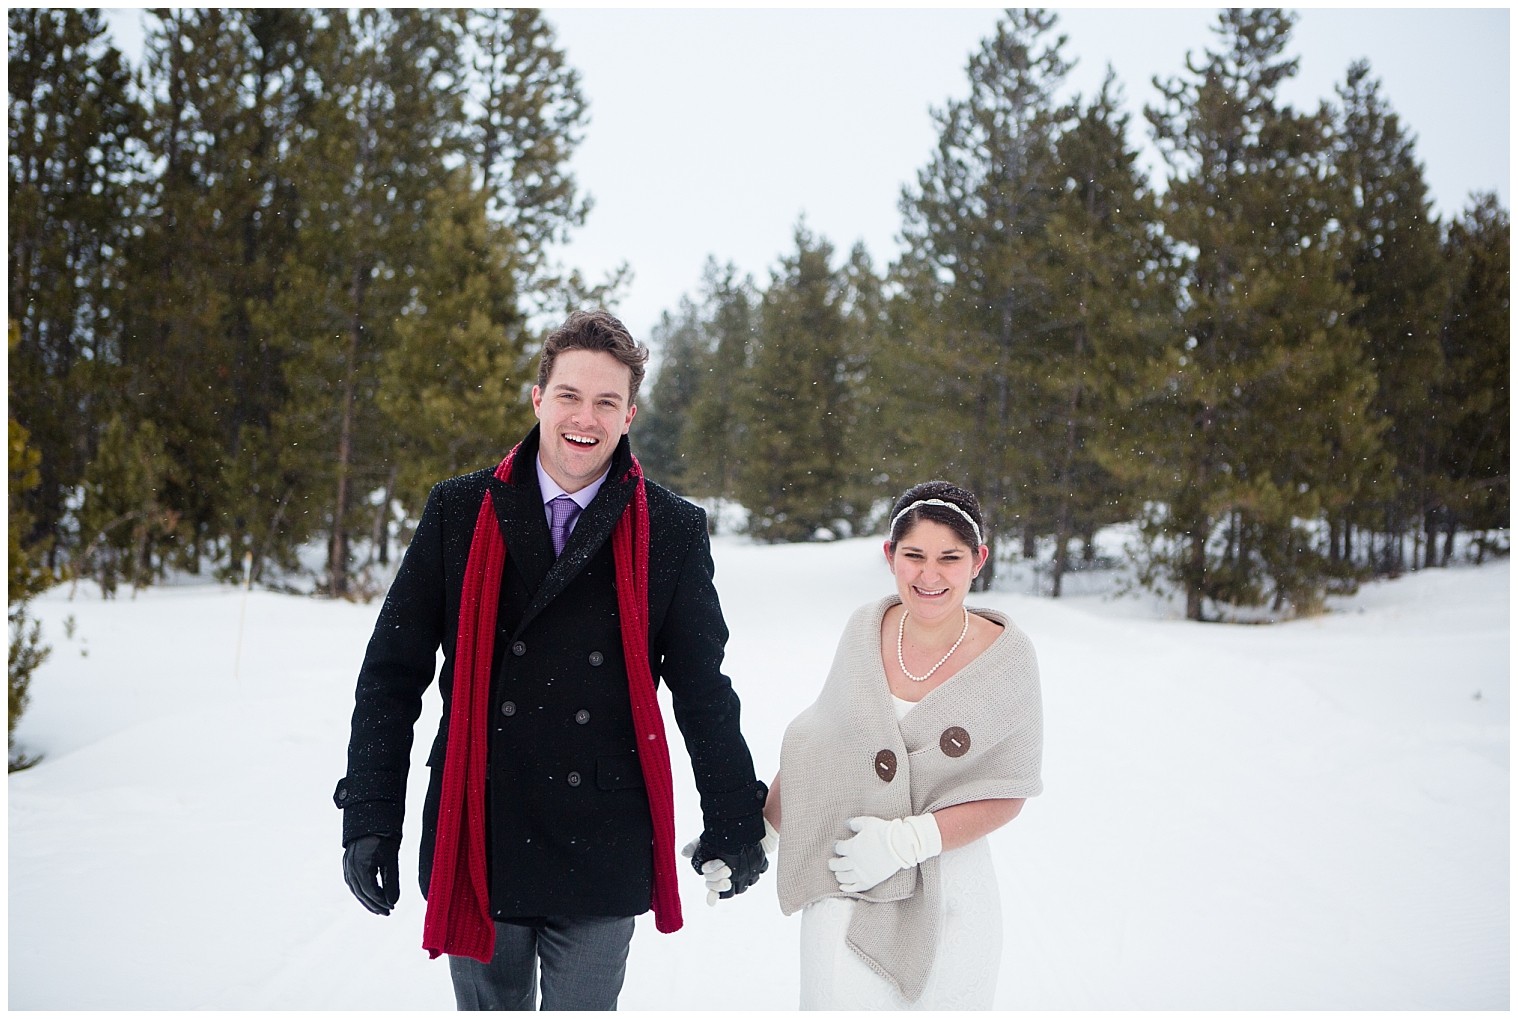 The wedding couple walk together through the snow at their Breckenridge Colorado mountain elopement.